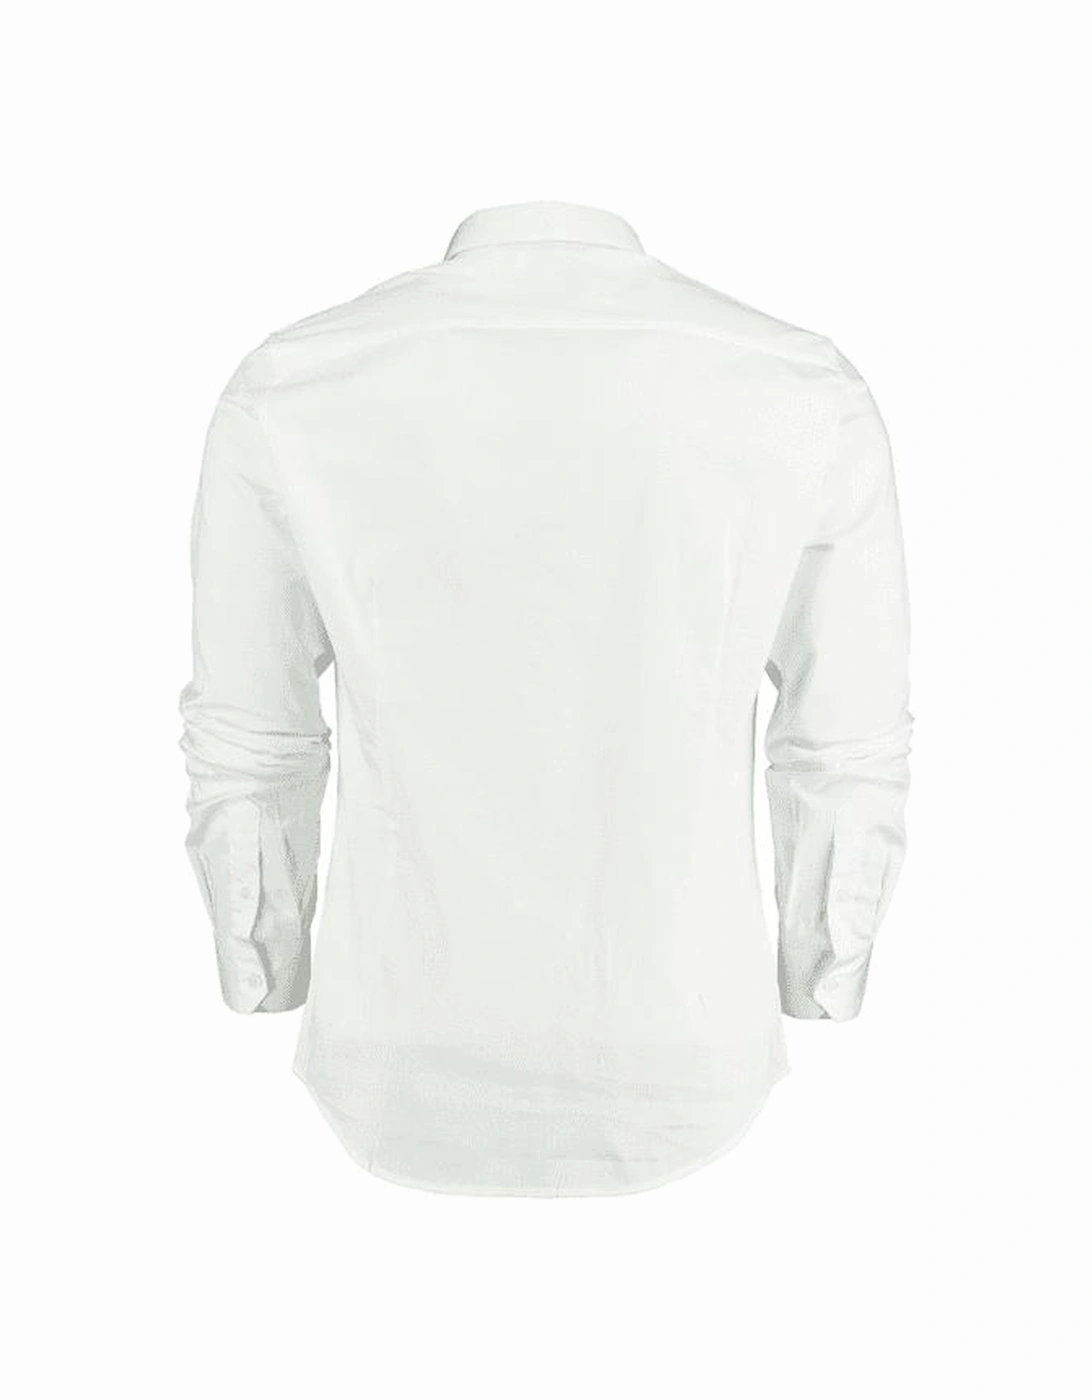 Stitch Logo Button Up White Shirt